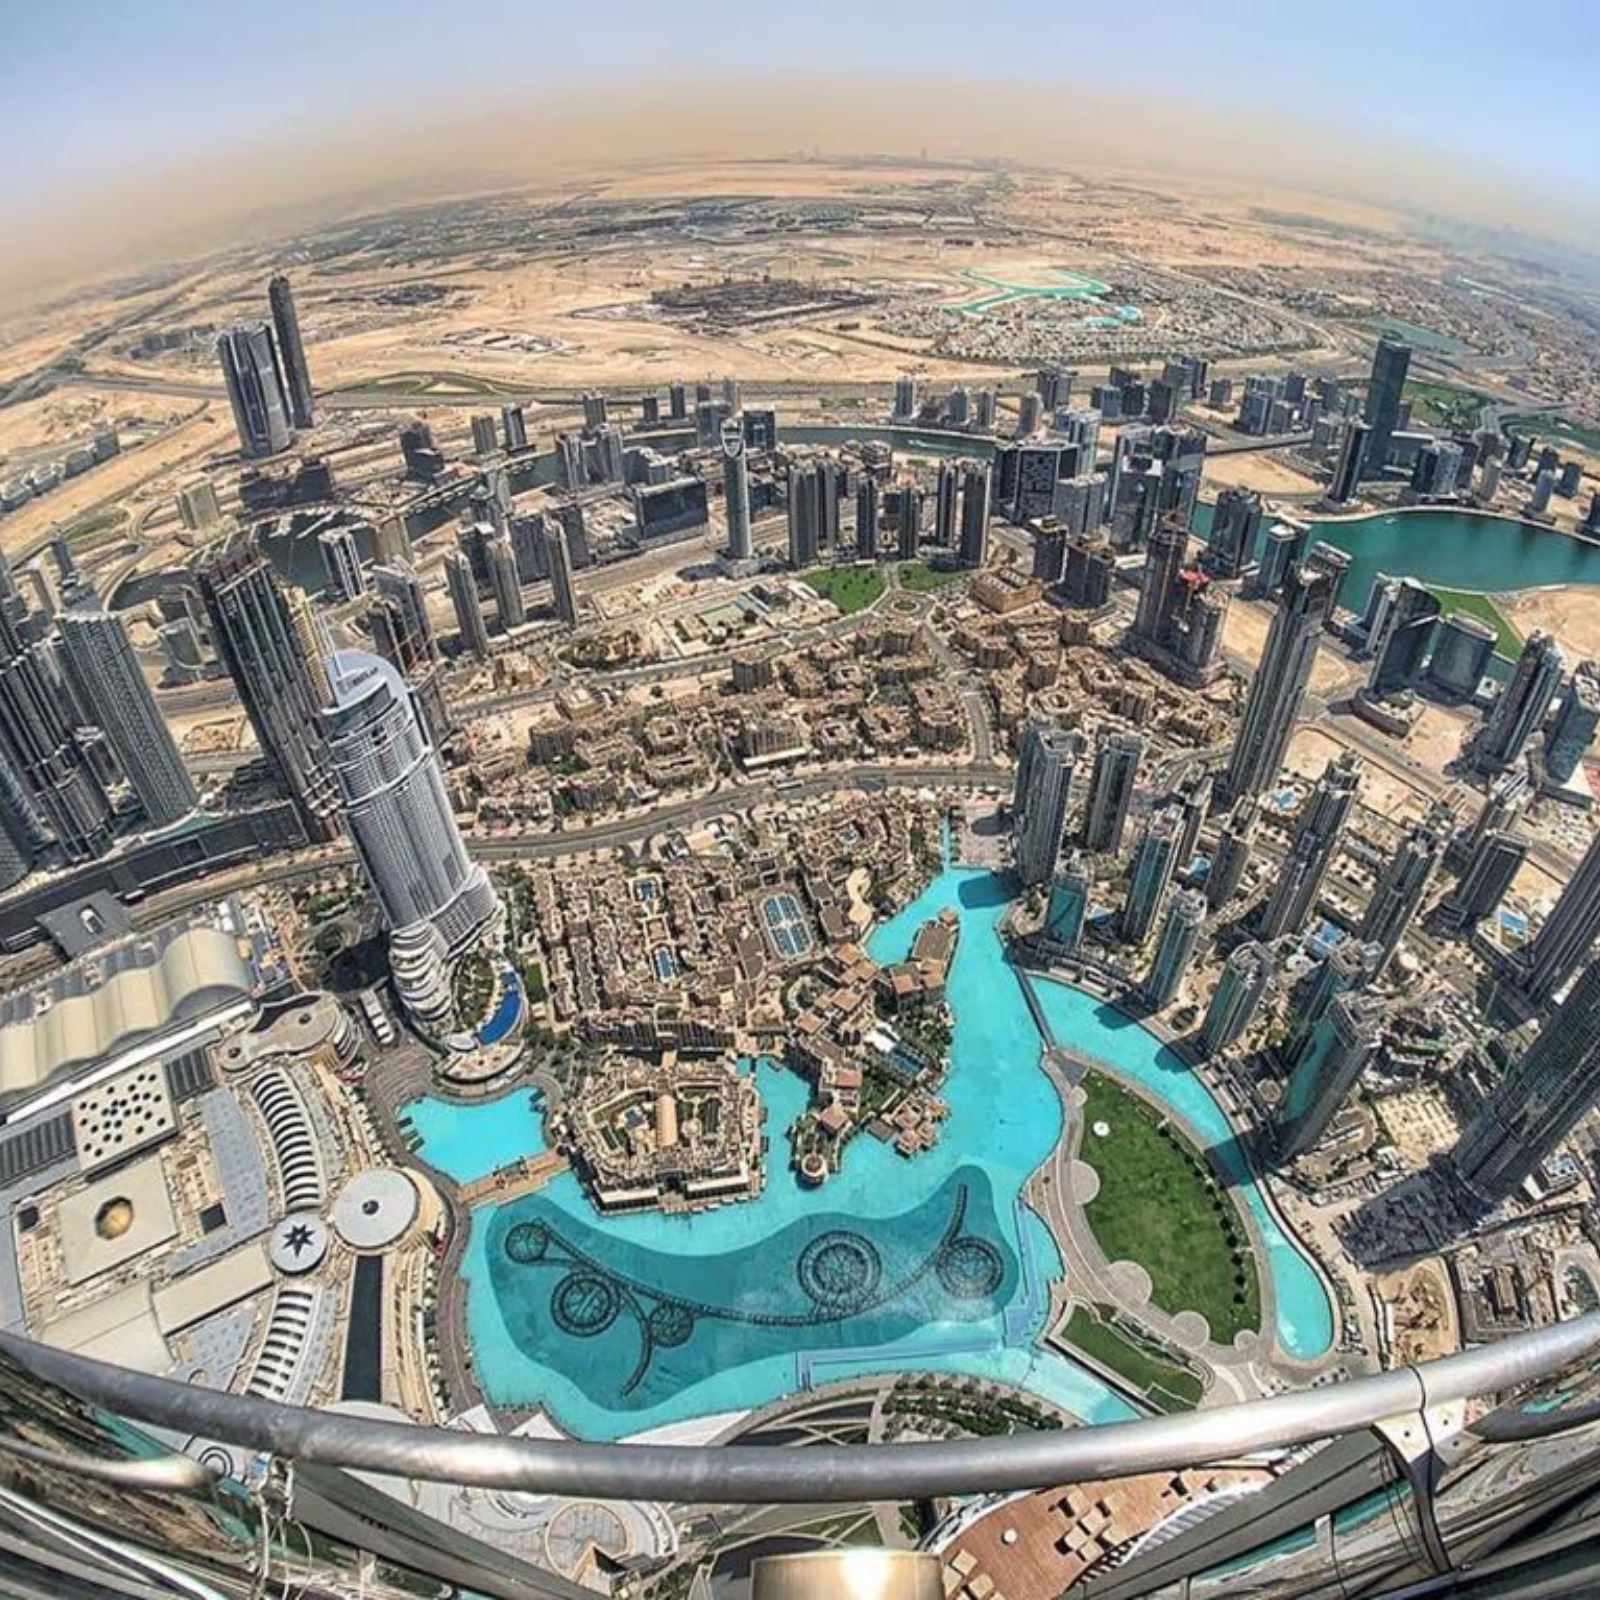 At the Top, Burj Khalifa